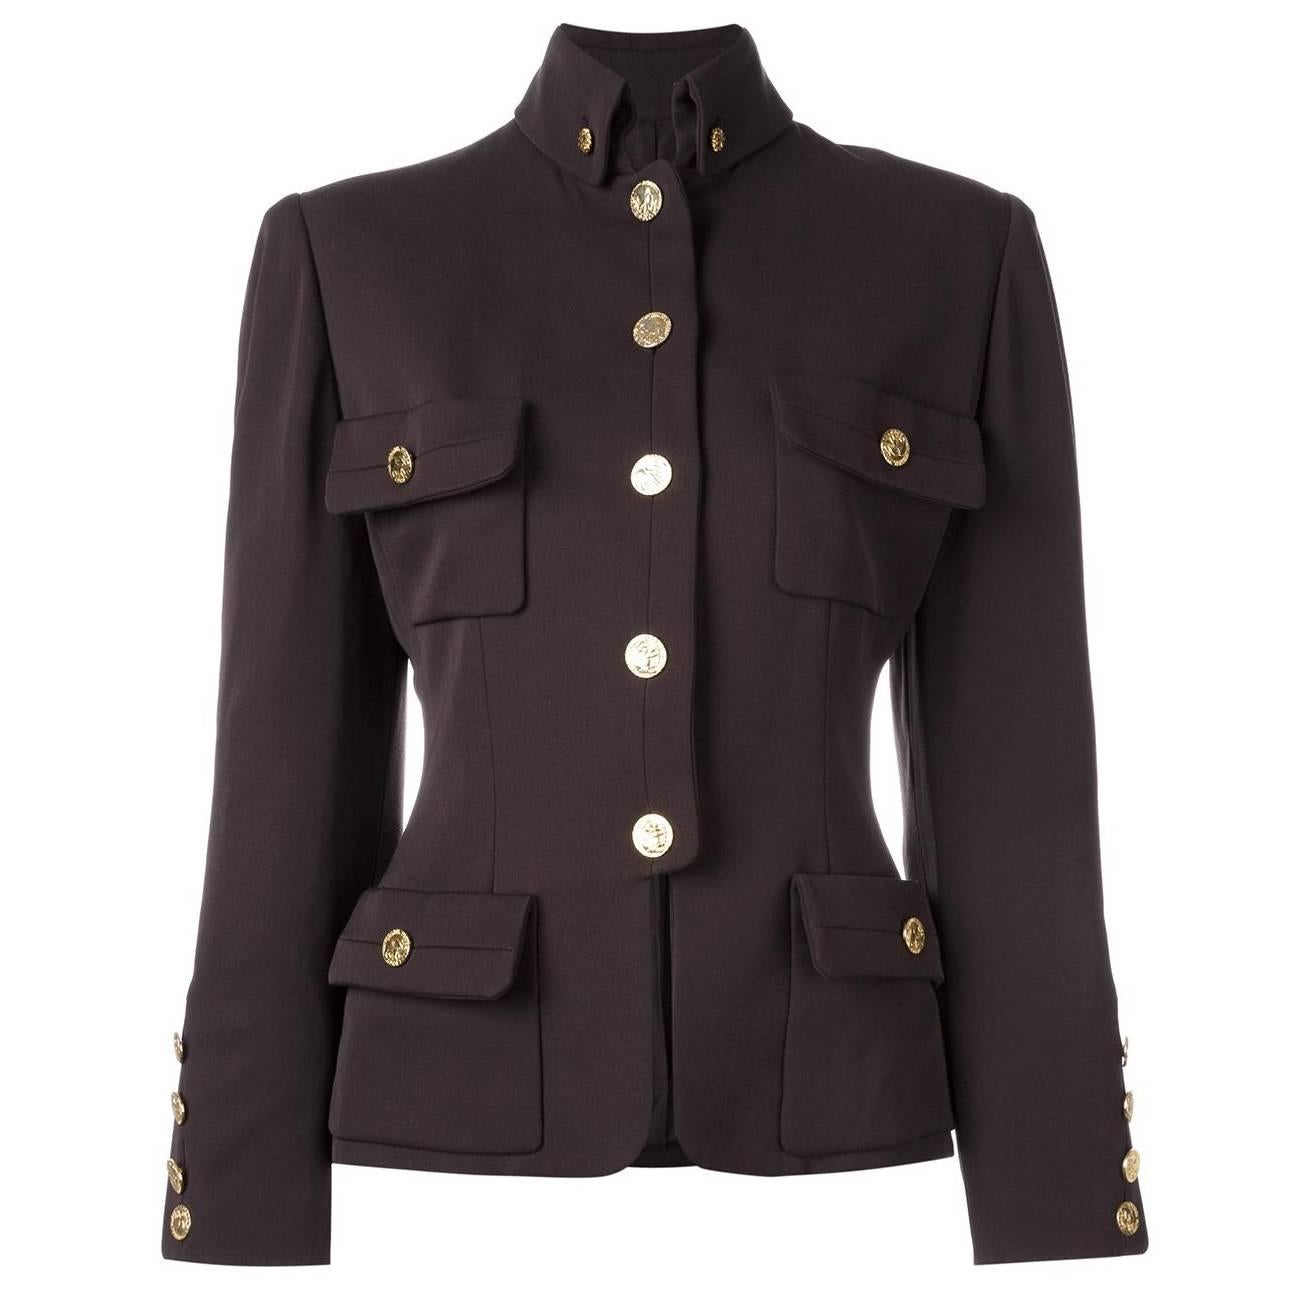 Chanel Vintage Military Jacket